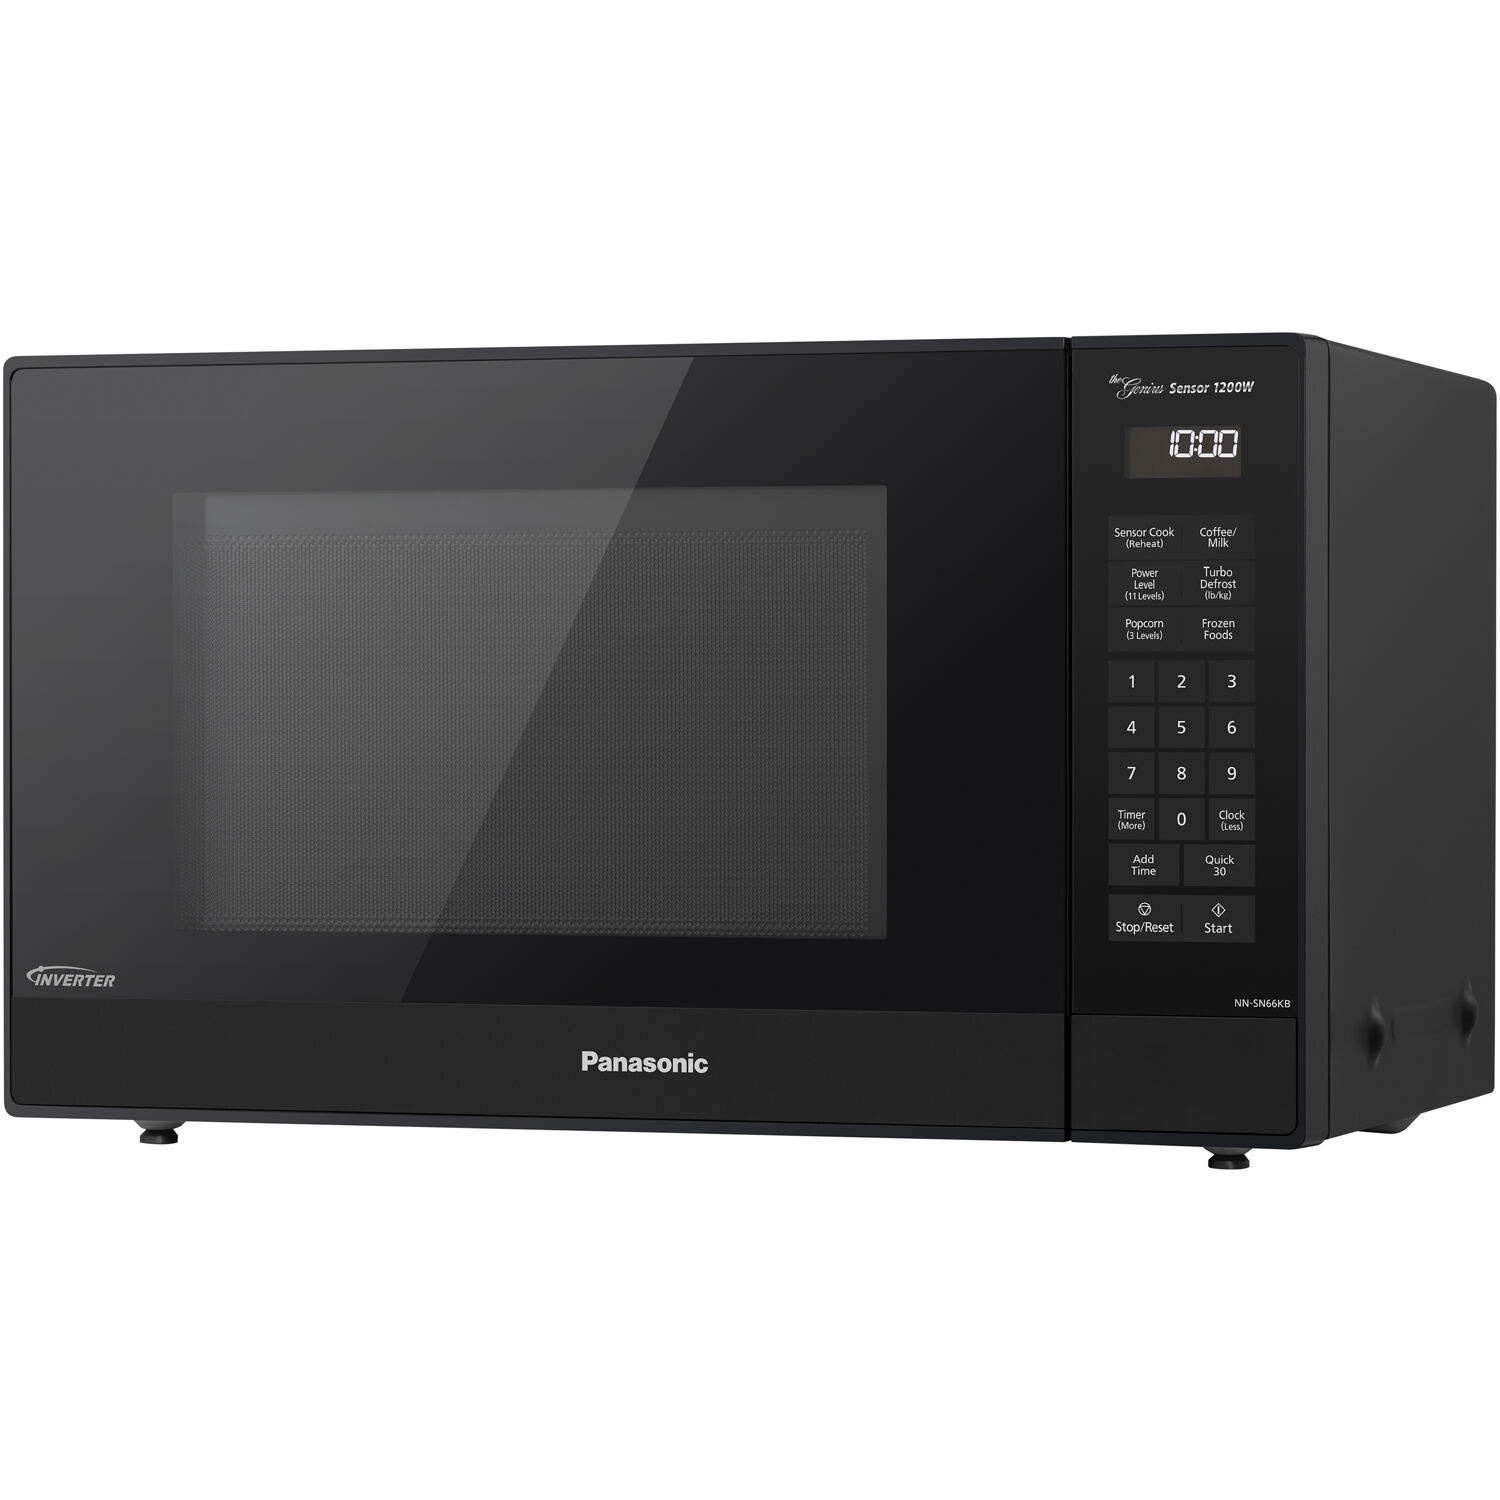 Panasonic 1.2 Cu. Ft. 1200W Genius Sensor Countertop Microwave Oven with Inverter Technology in Black - image 3 of 11